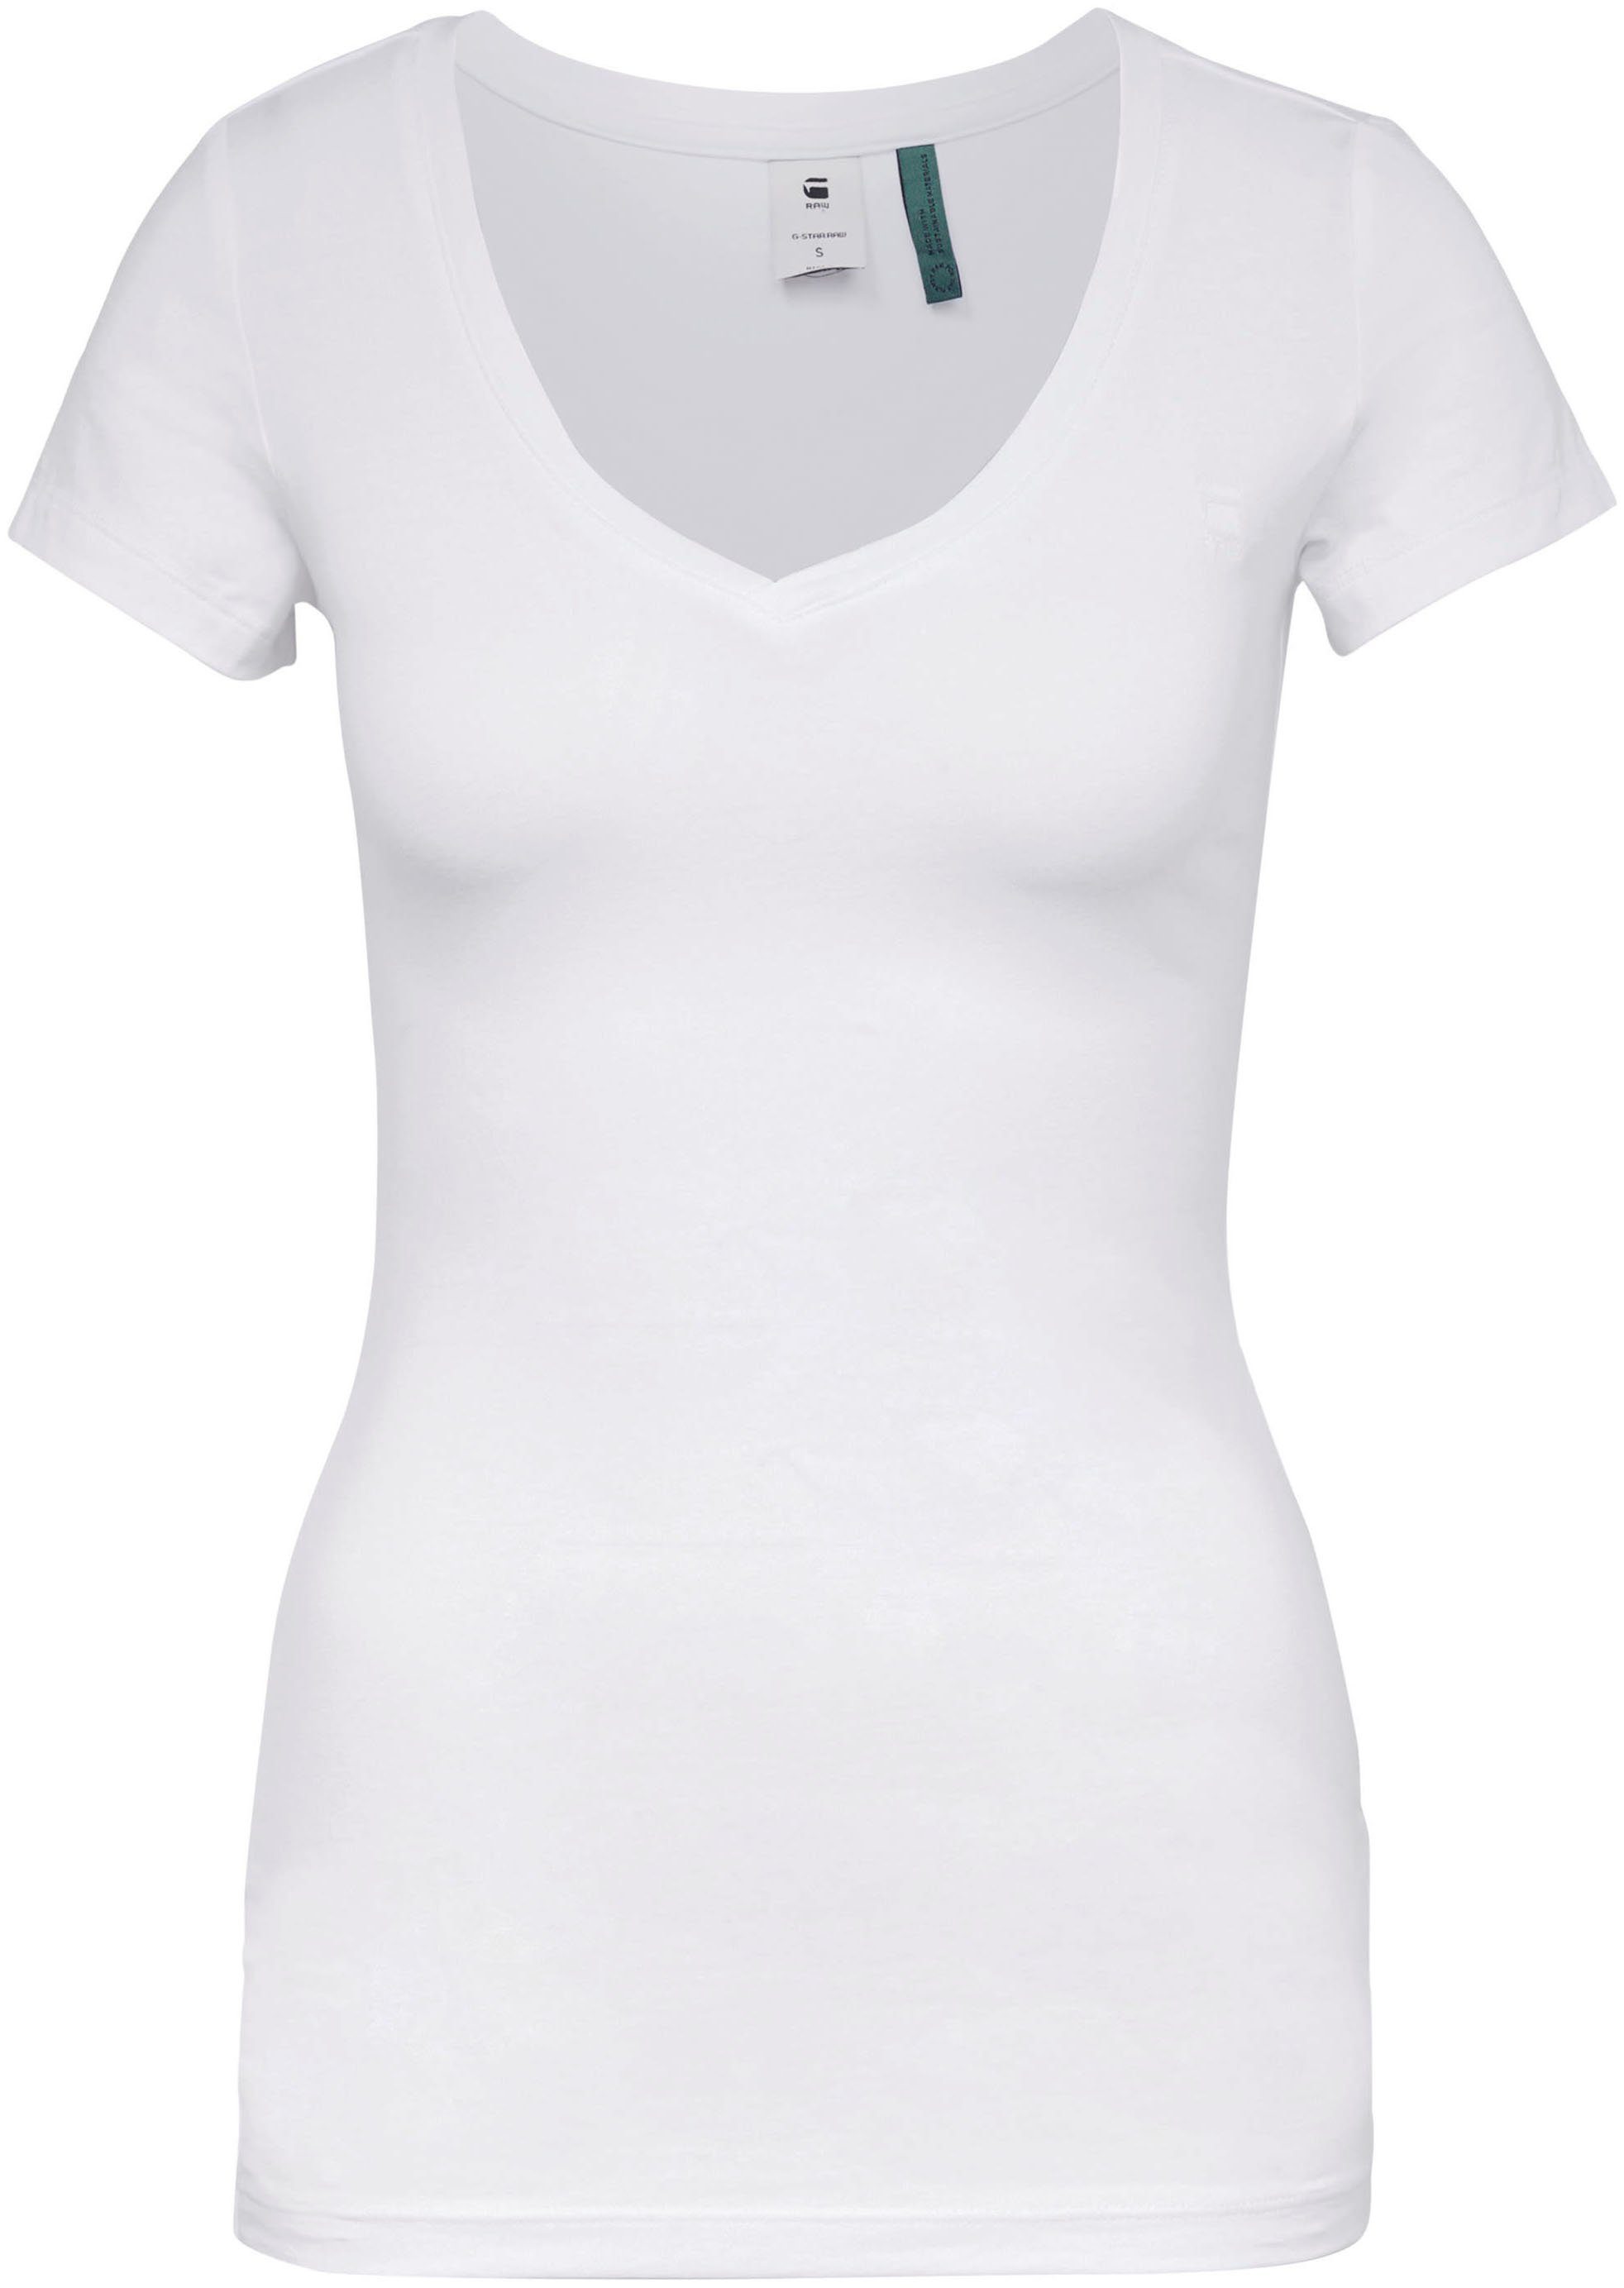 Base white V-Shirt RAW wmn sl v mit t cap vorne kleinem G-Star Logodruck